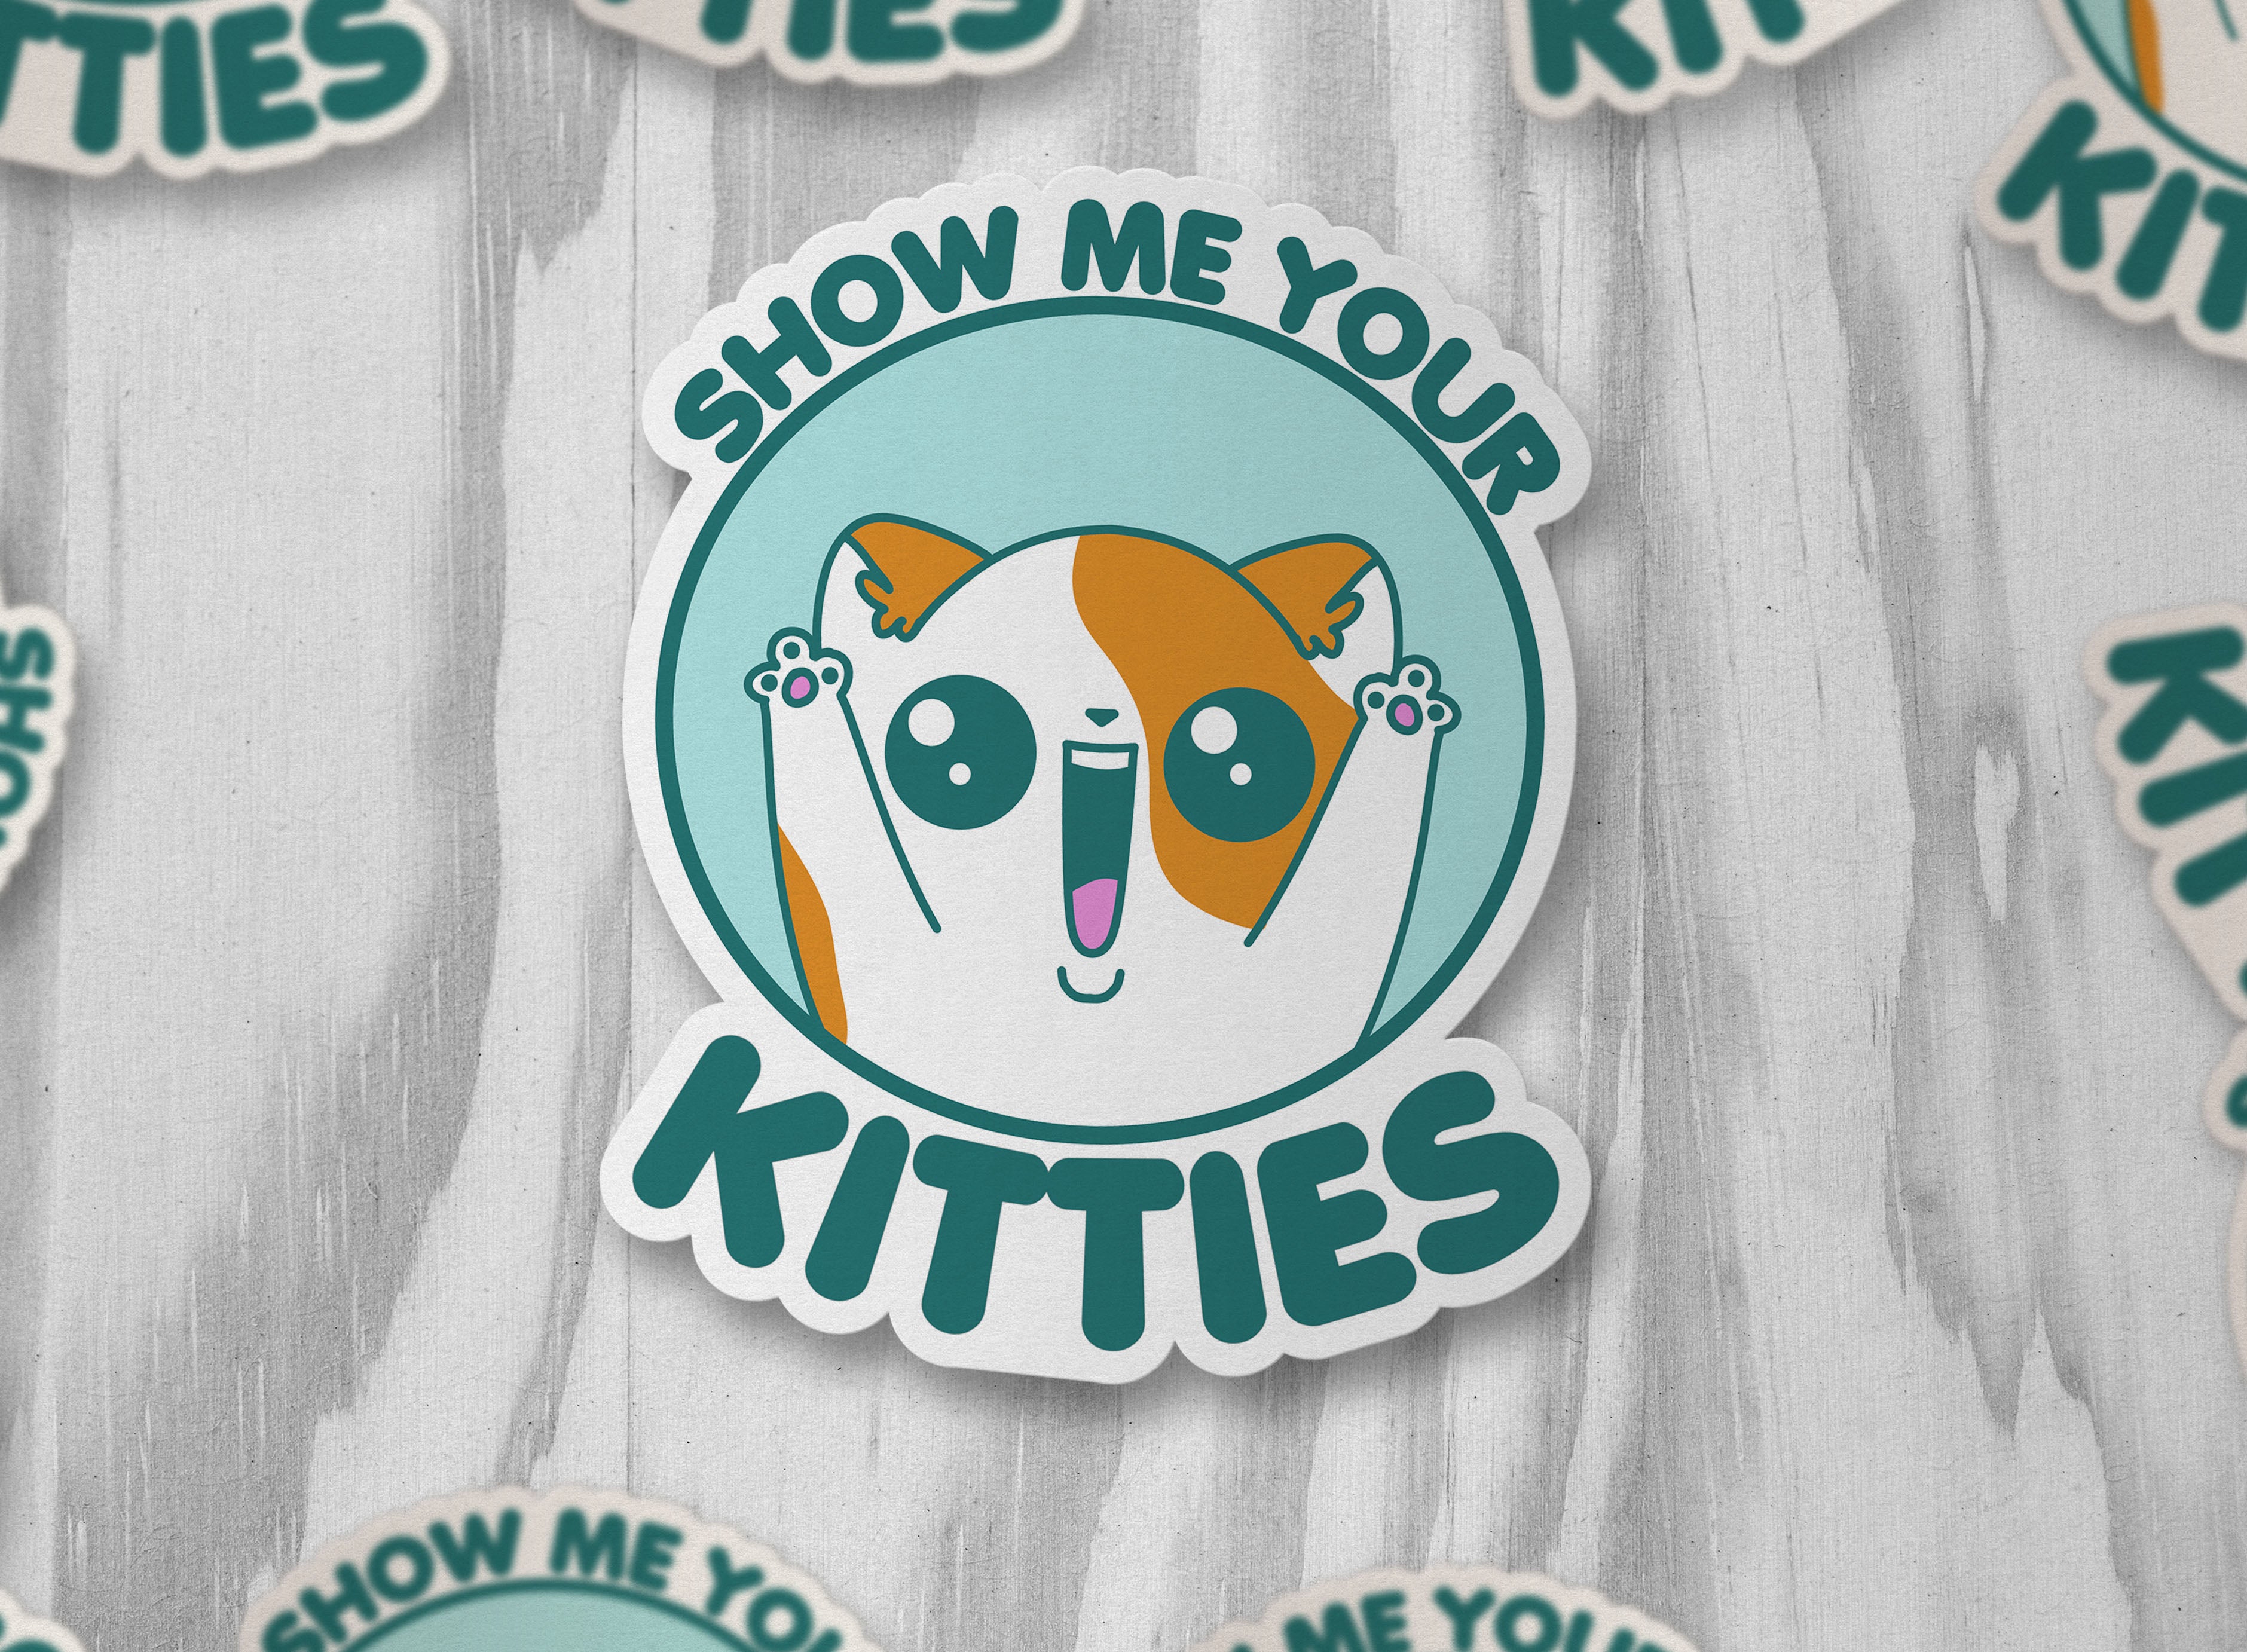 Show Me Your Kitties - ChubbleGumLLC